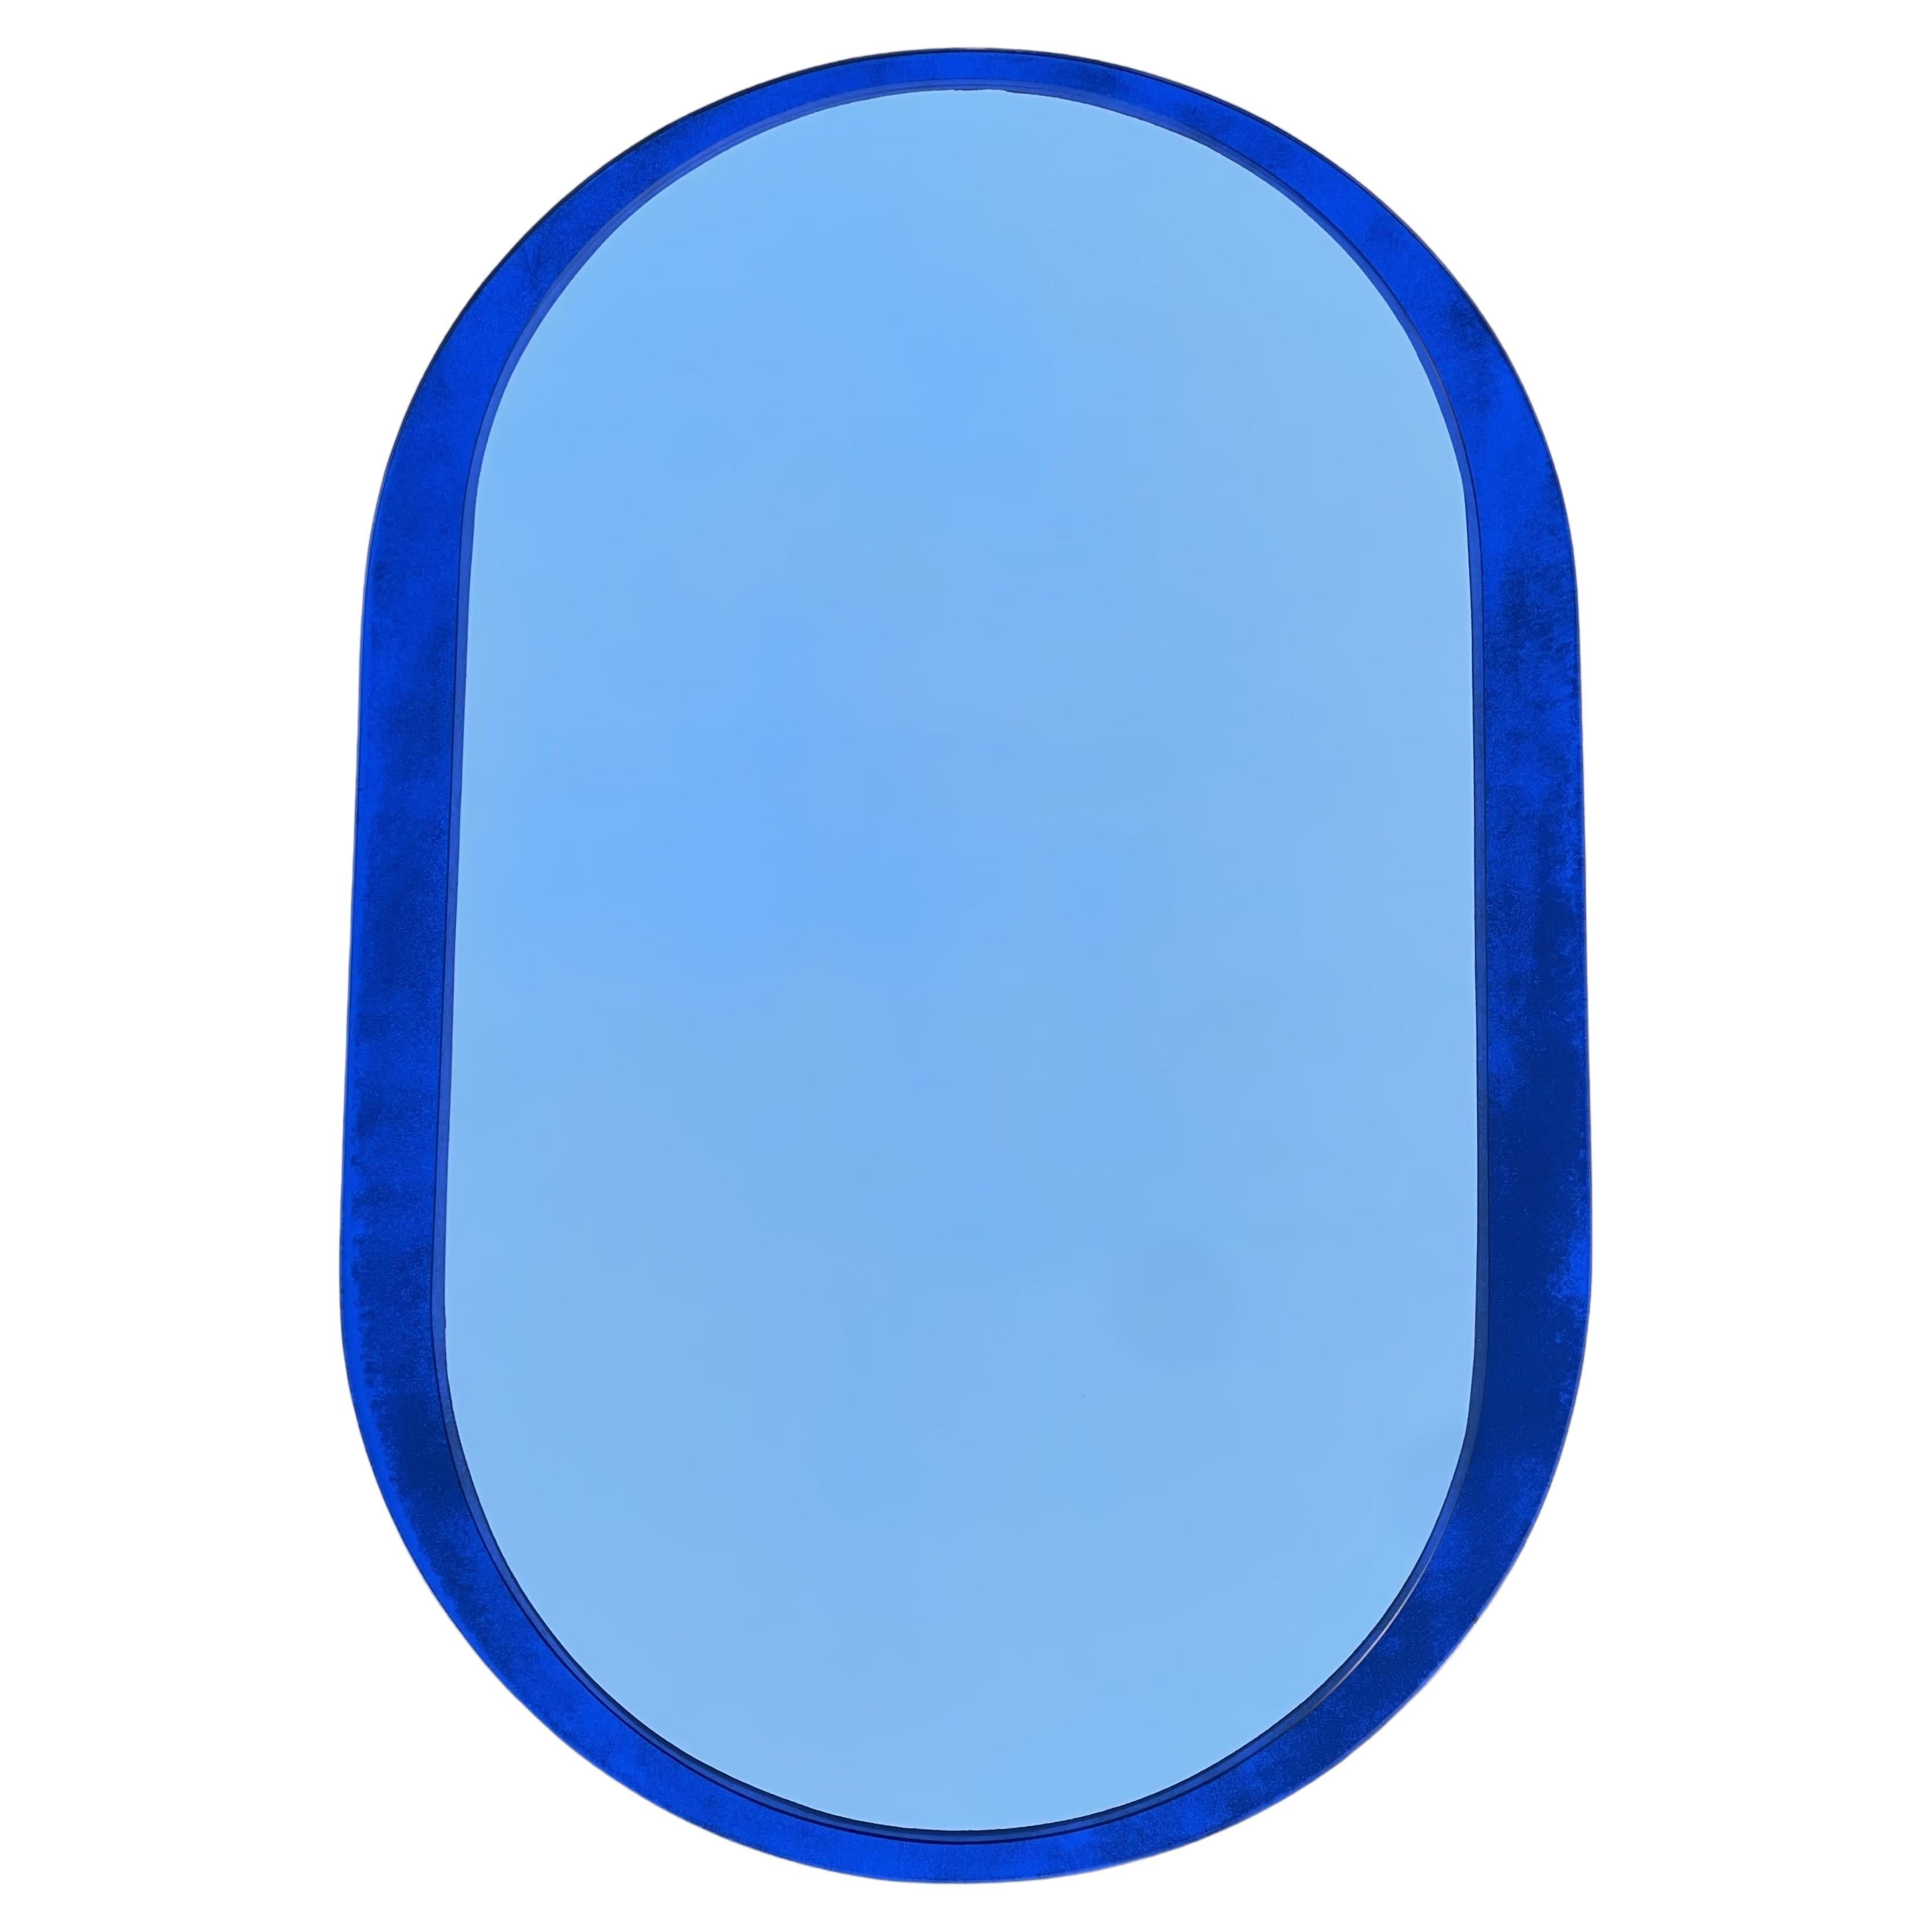 Designer 1970s Veca Made in Italy Mid-Century Modern Wall Cobalt Blue Mirror